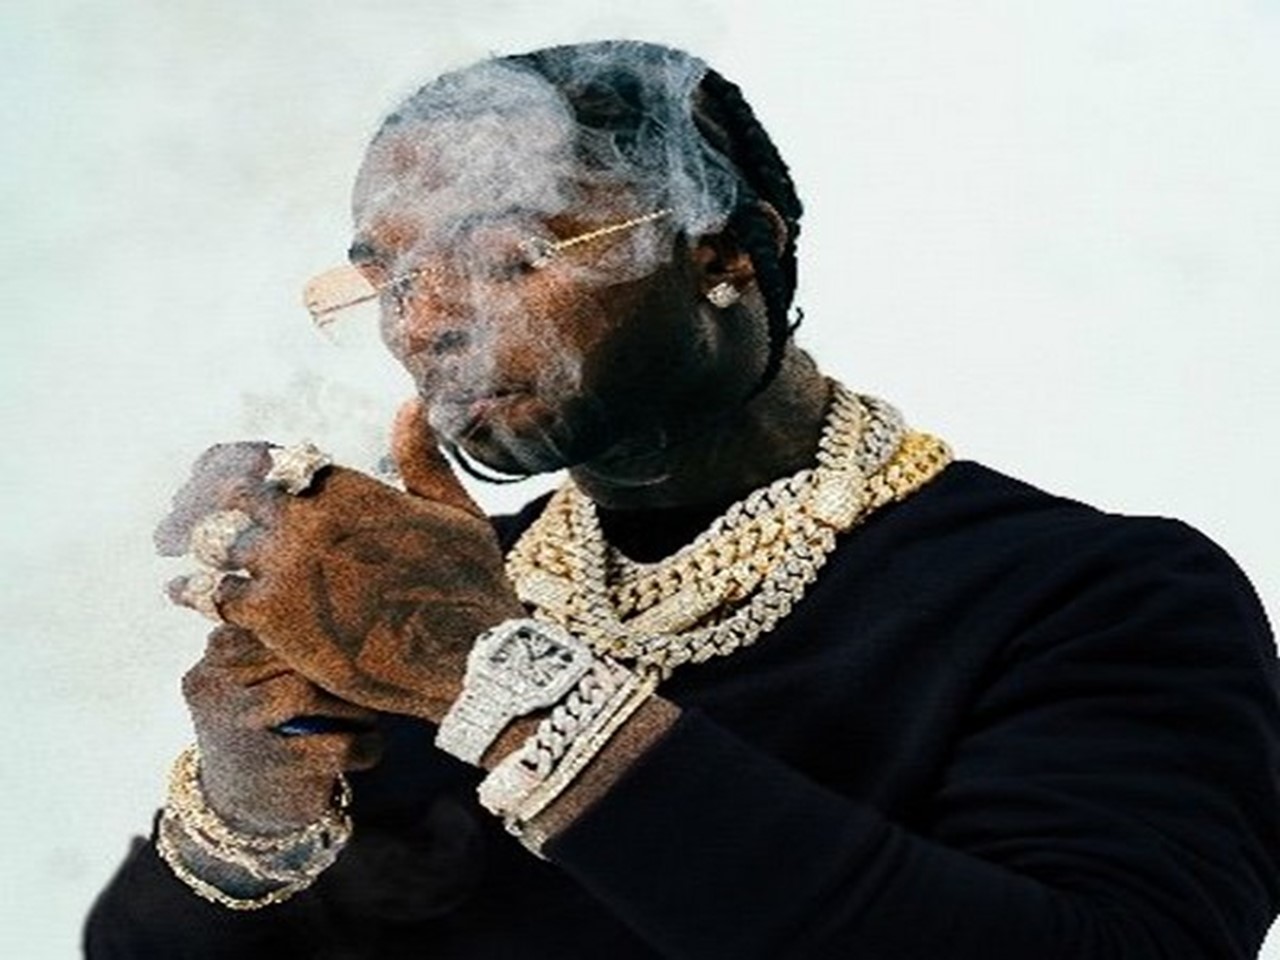 Luciano pop smoke